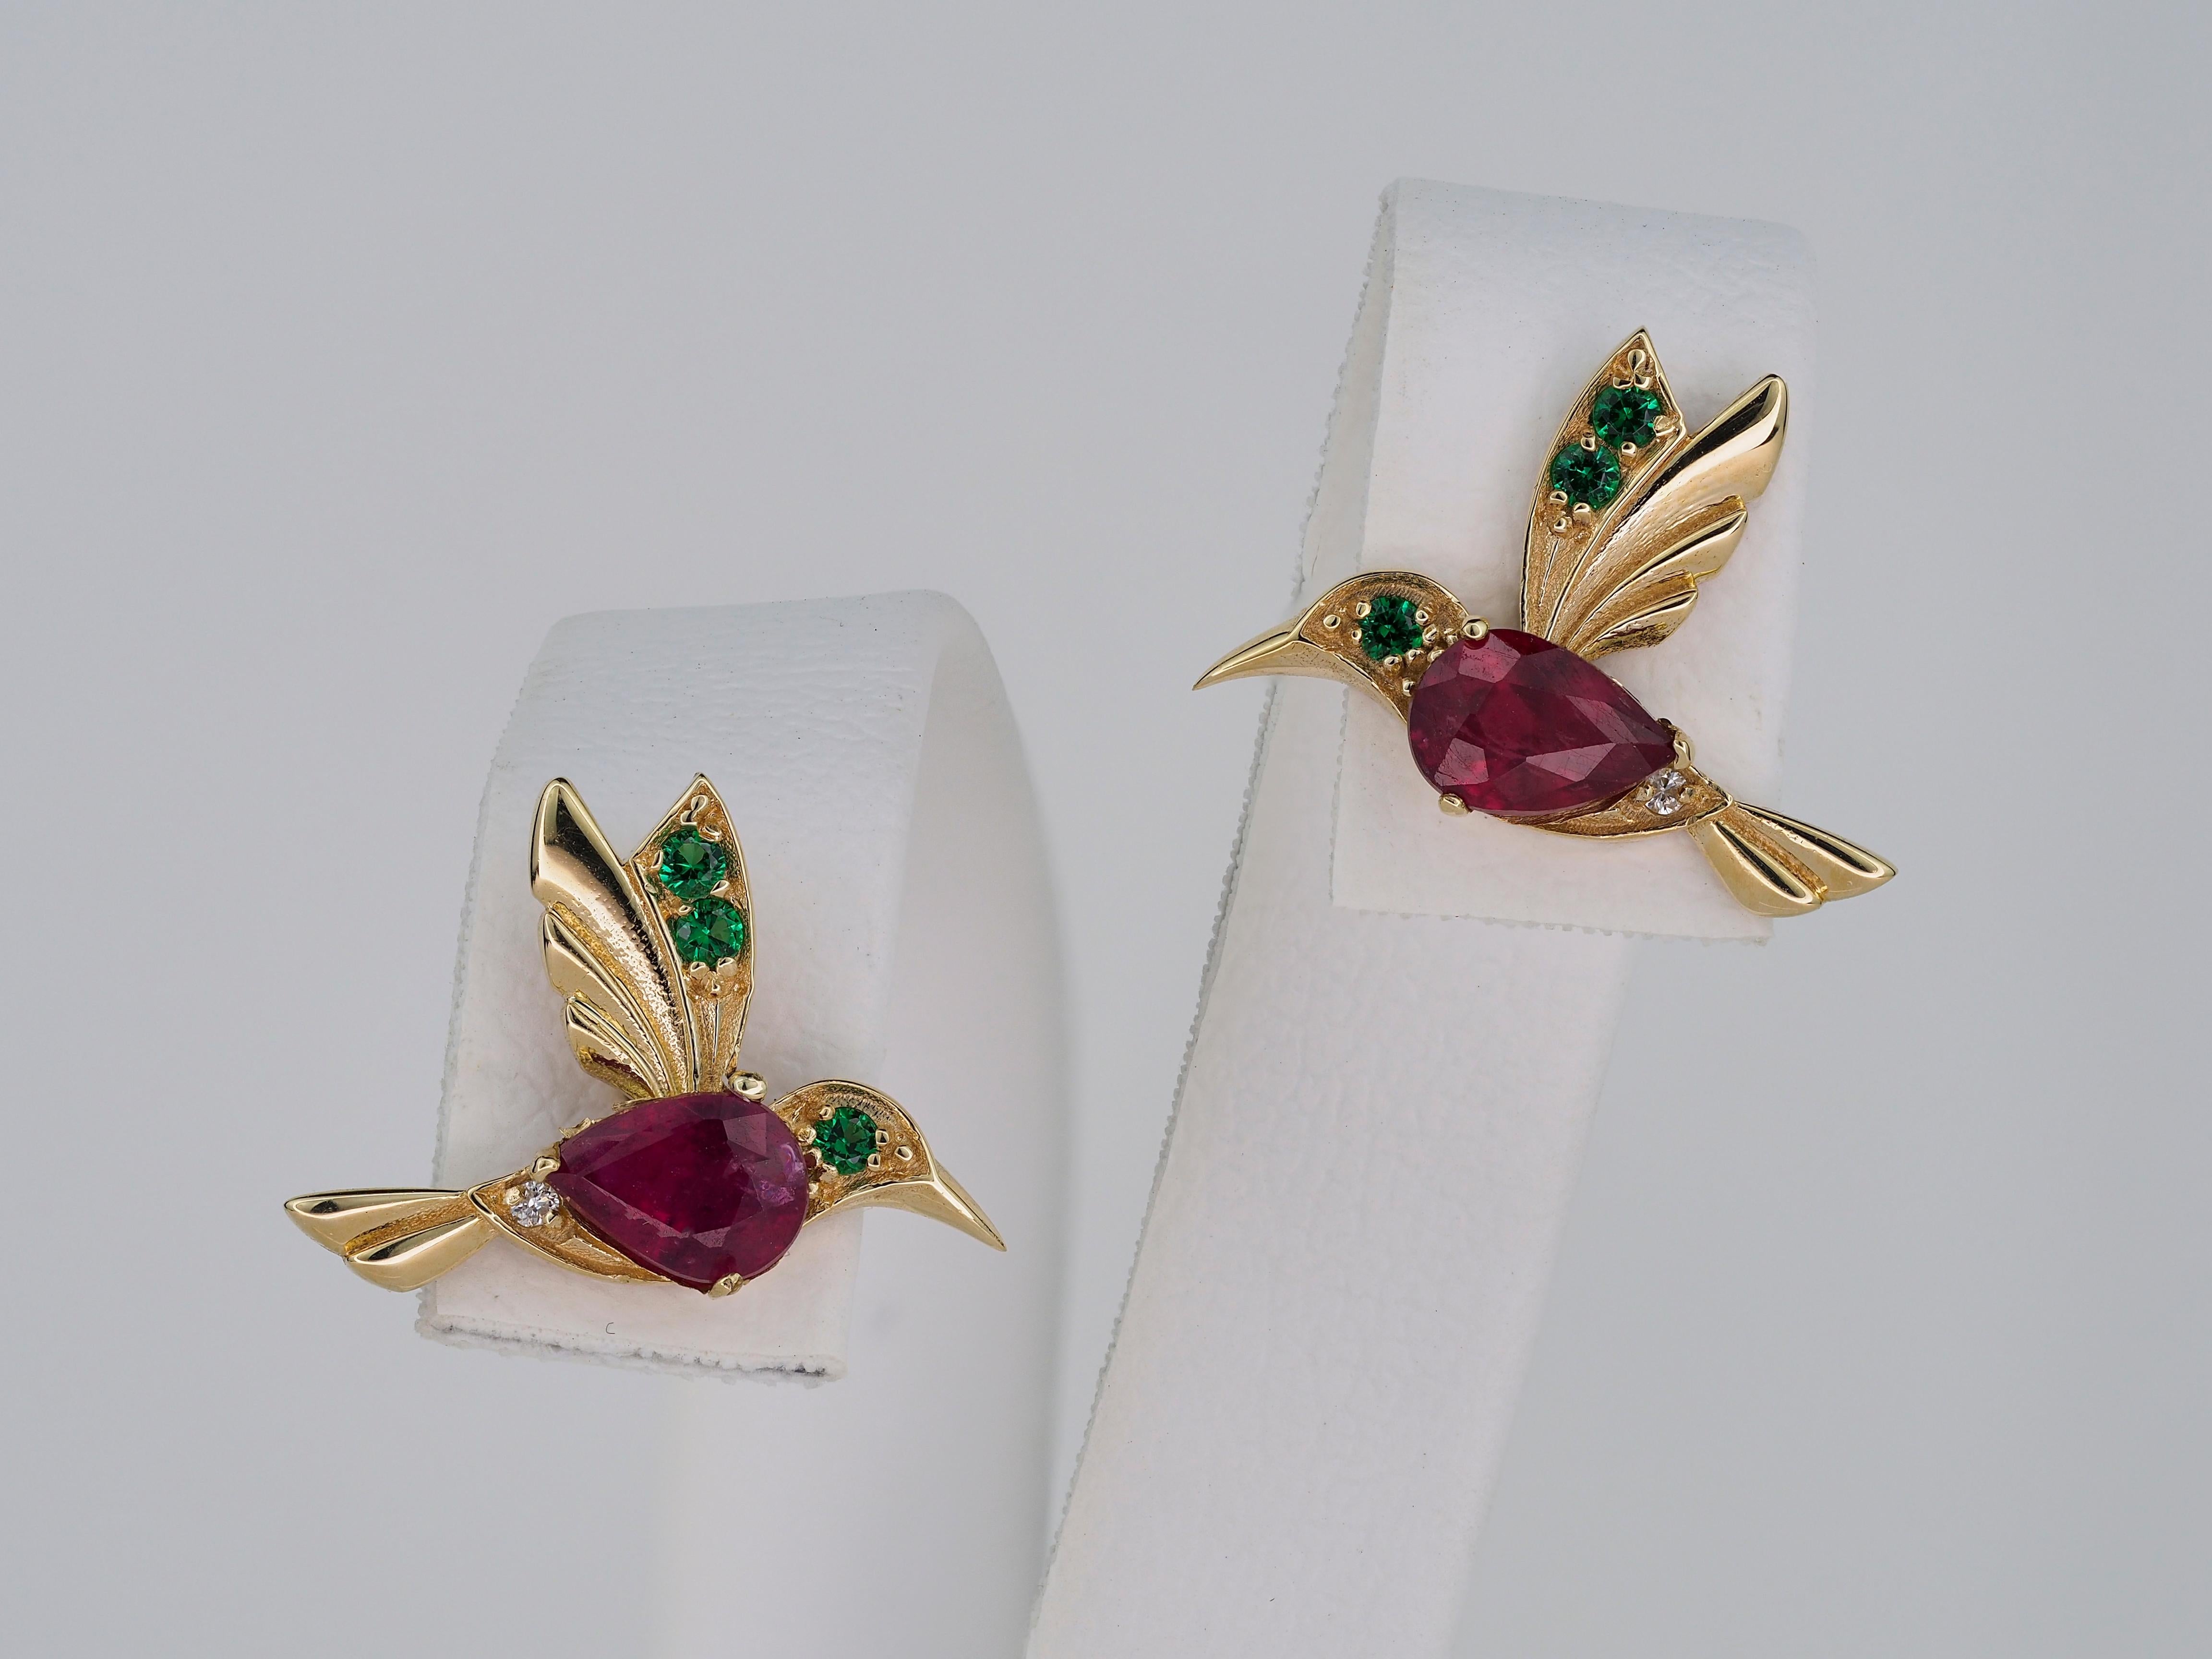 14k Gold Hummingbird Earings Studs with Rubies, Bird Stud Earrings with Gems ! 4